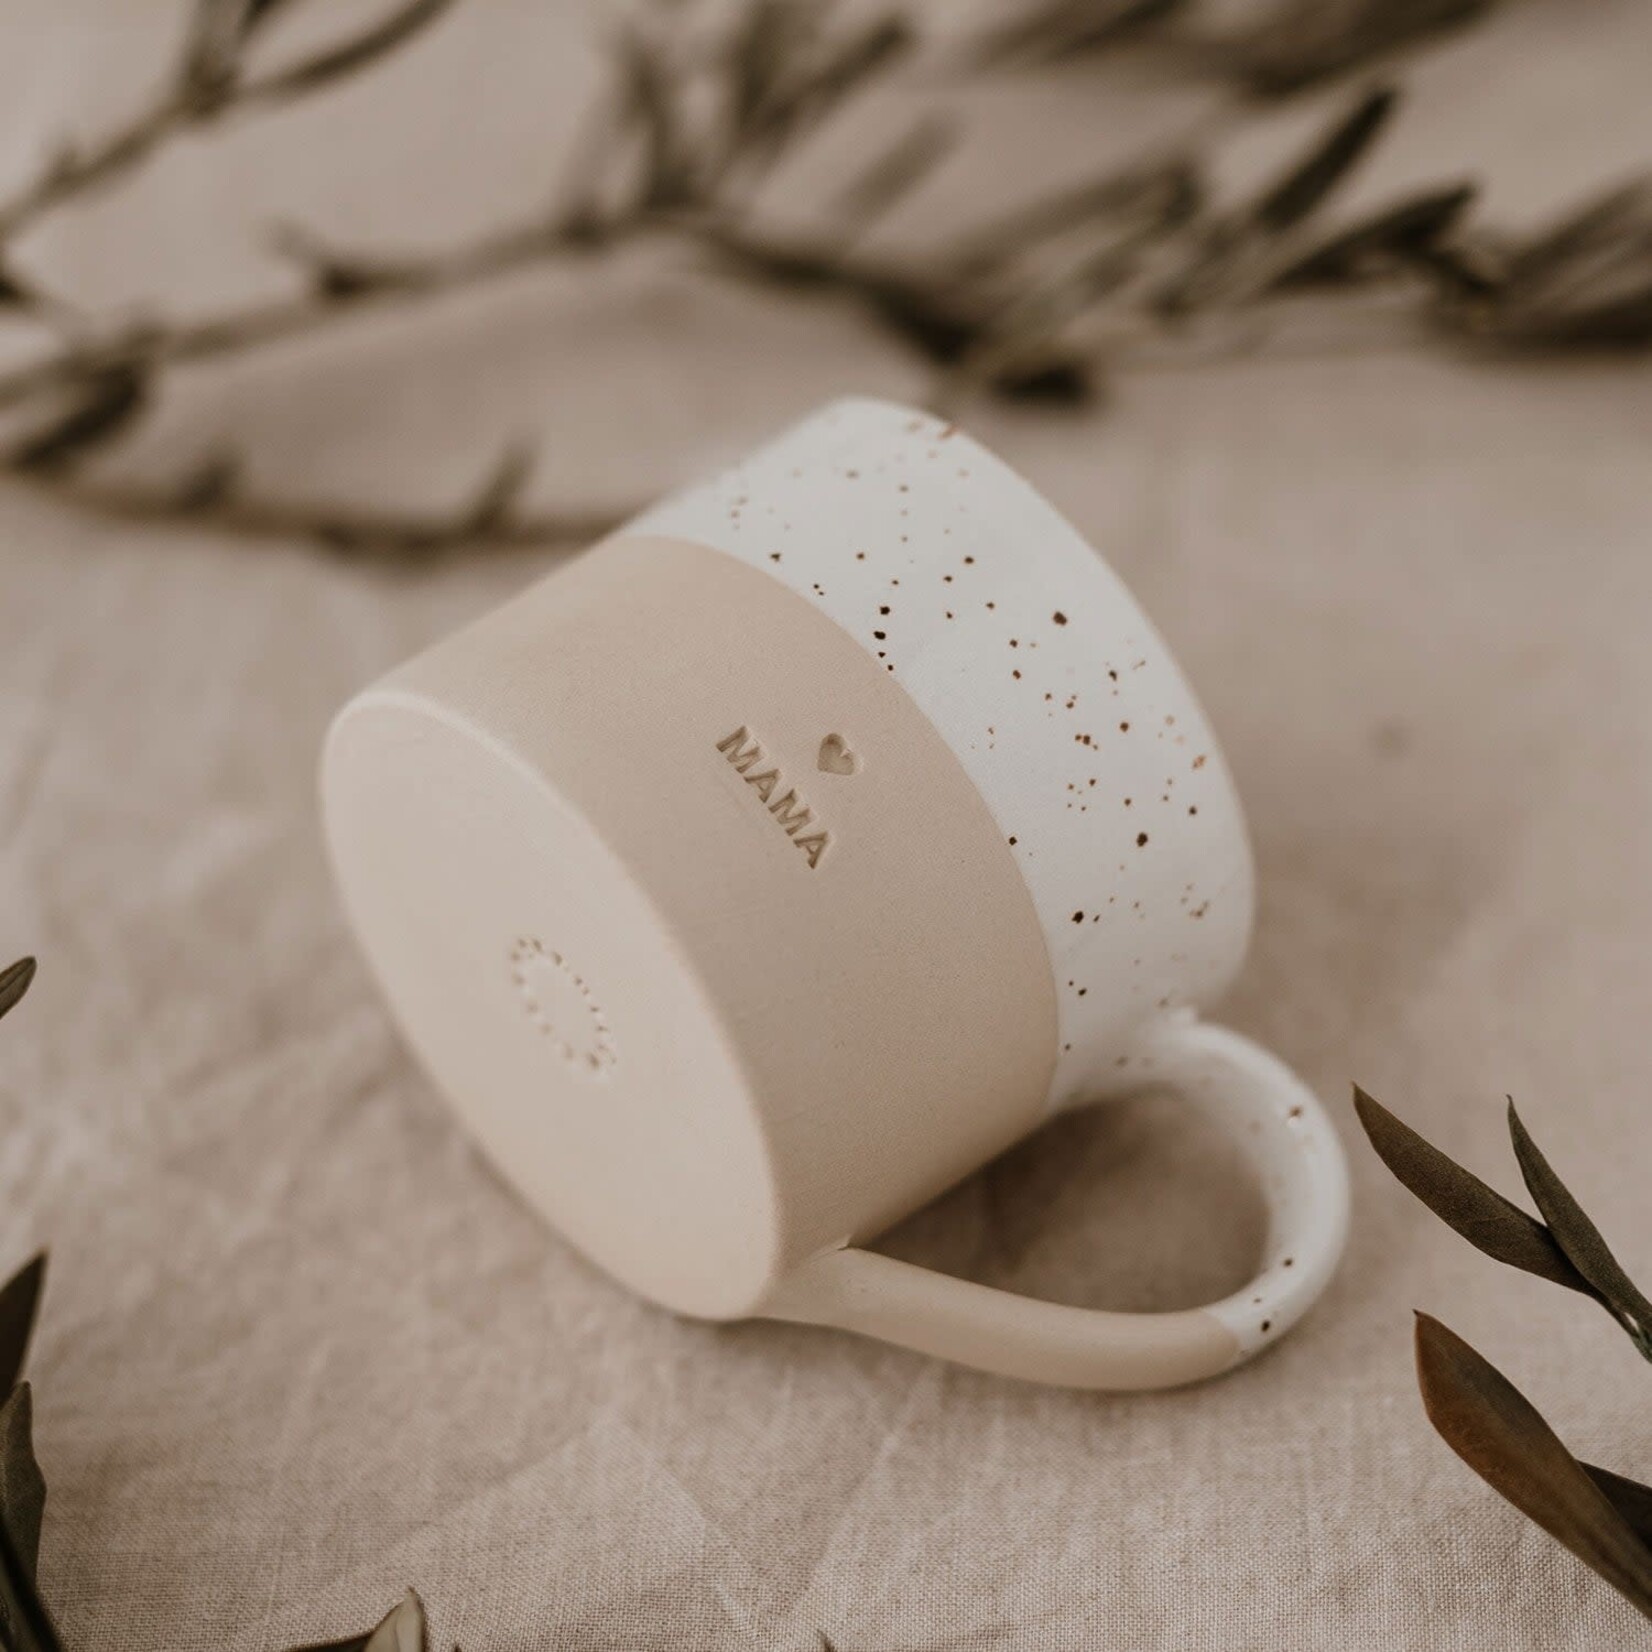 Eulenschnitt Mama - Coffee Mug